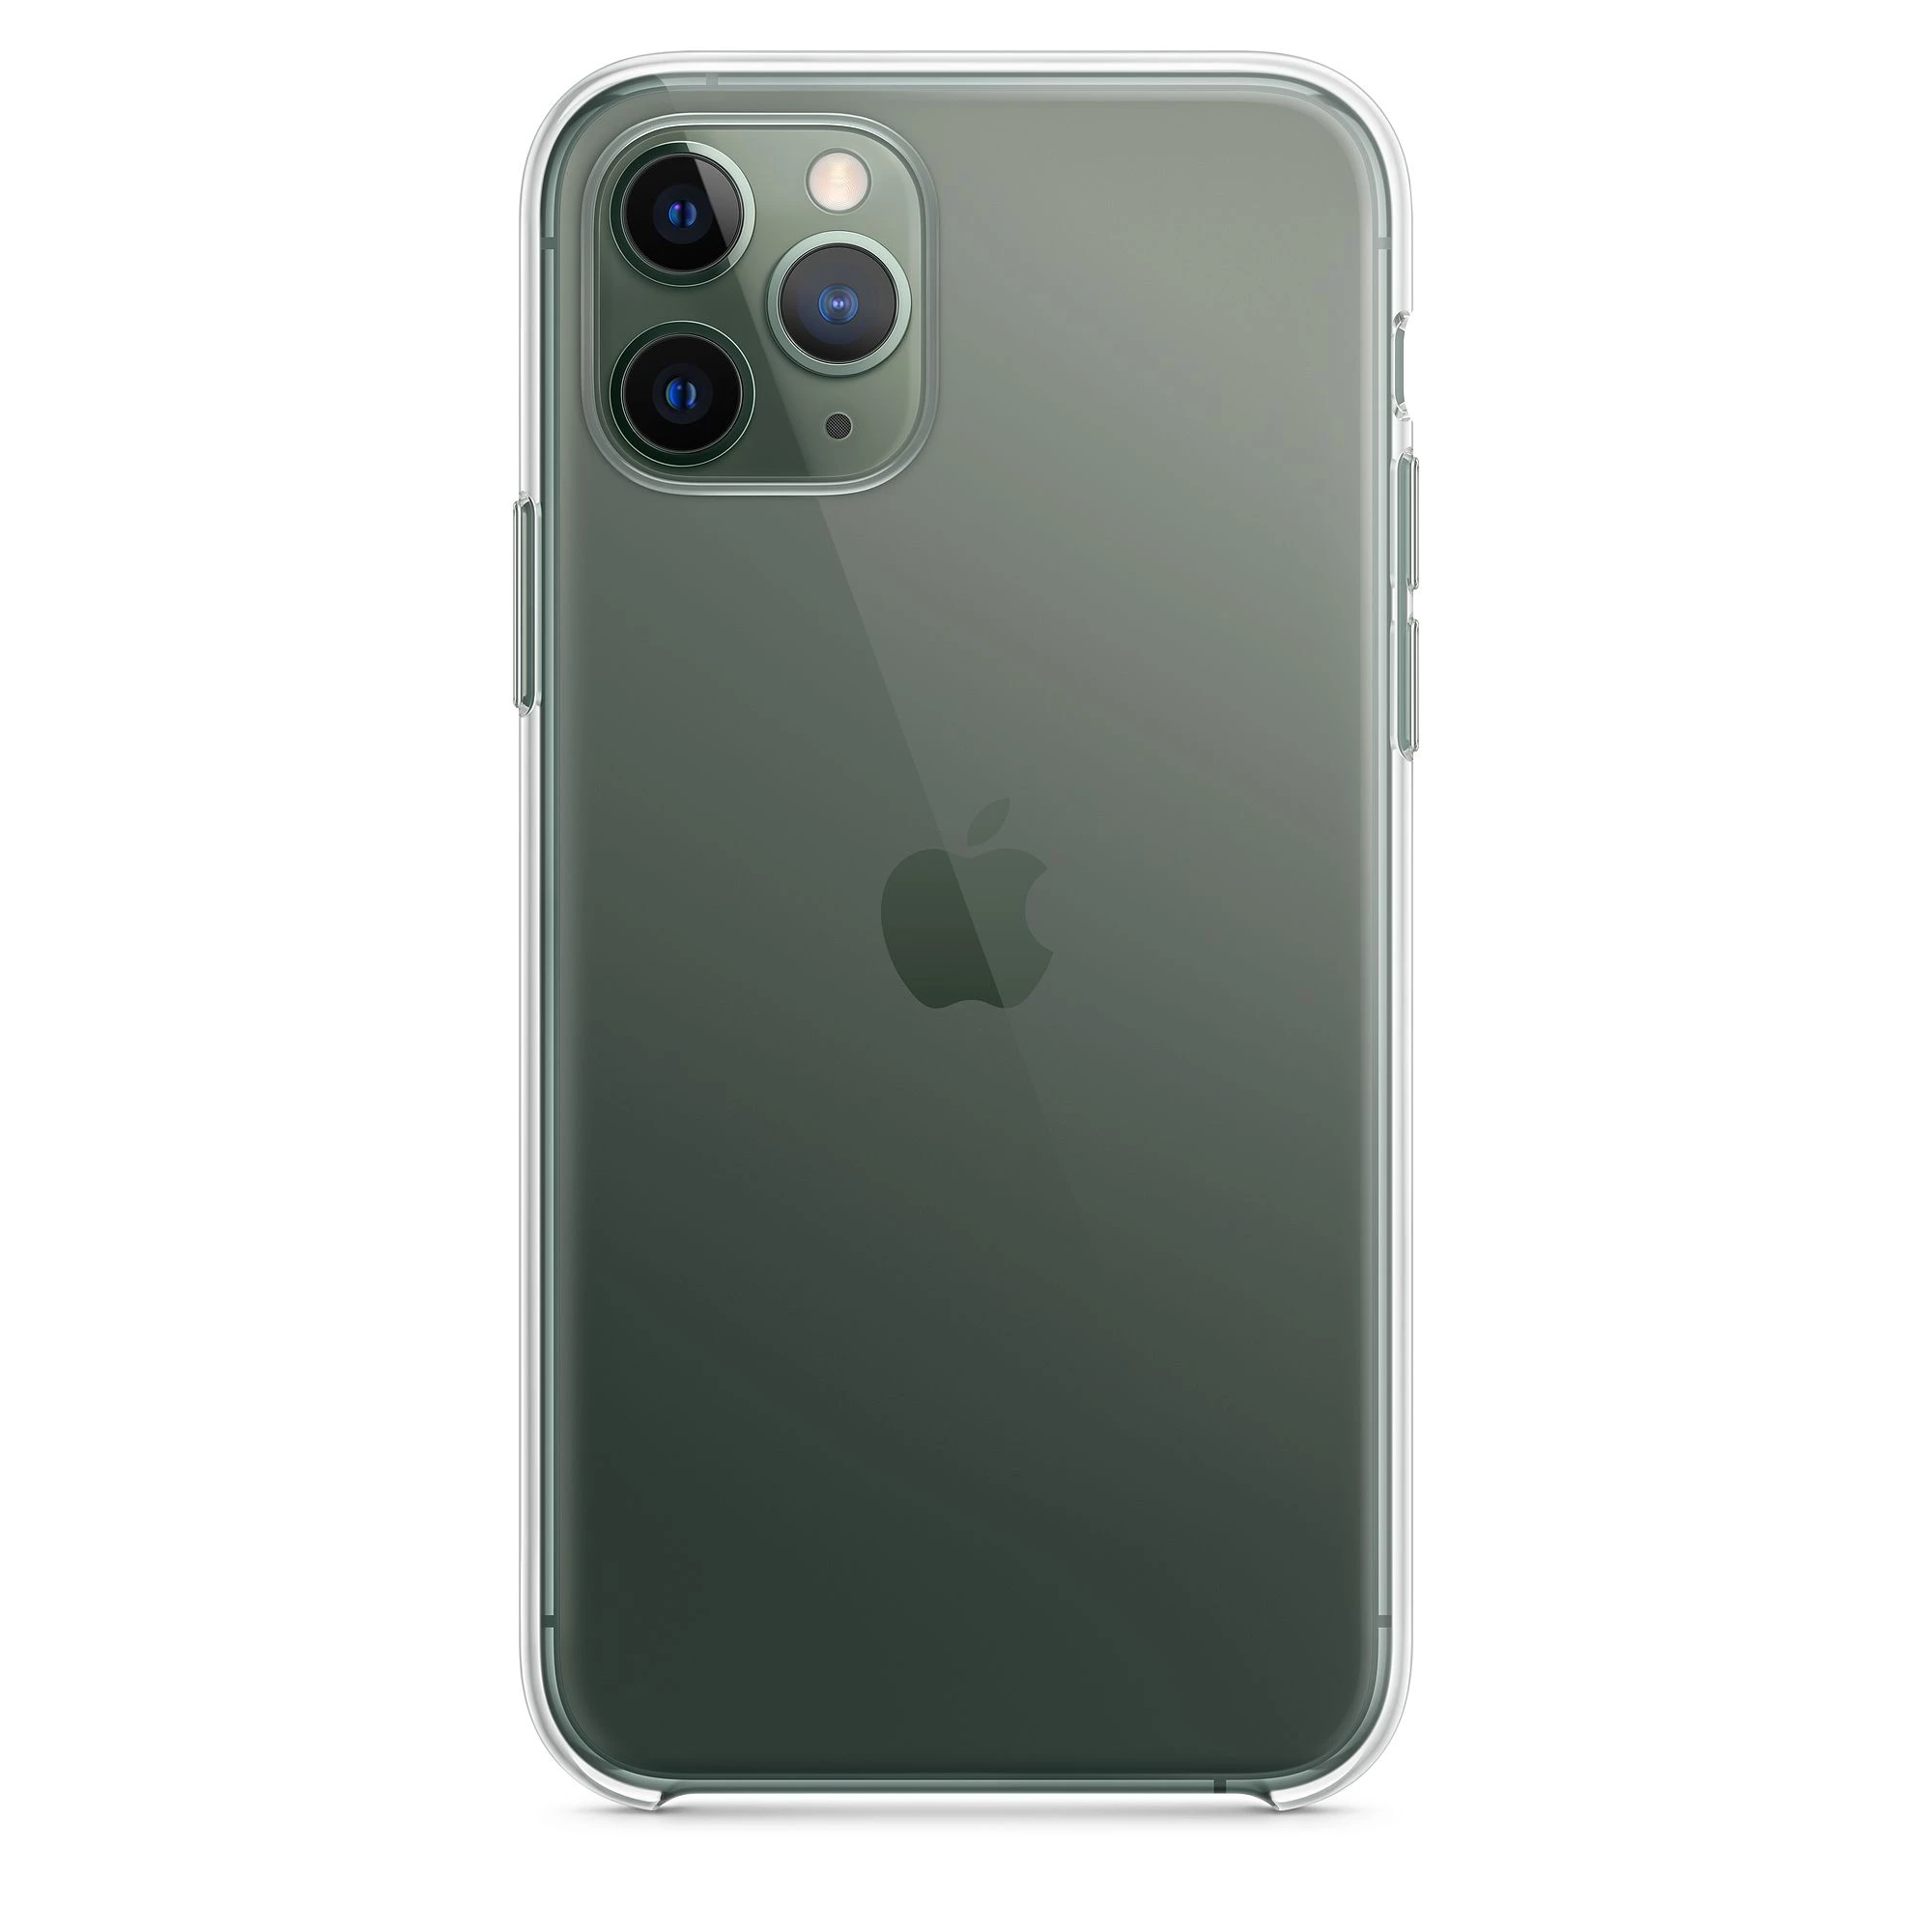 Чехол Apple iPhone 11 Pro Clear Case (MWYK2)